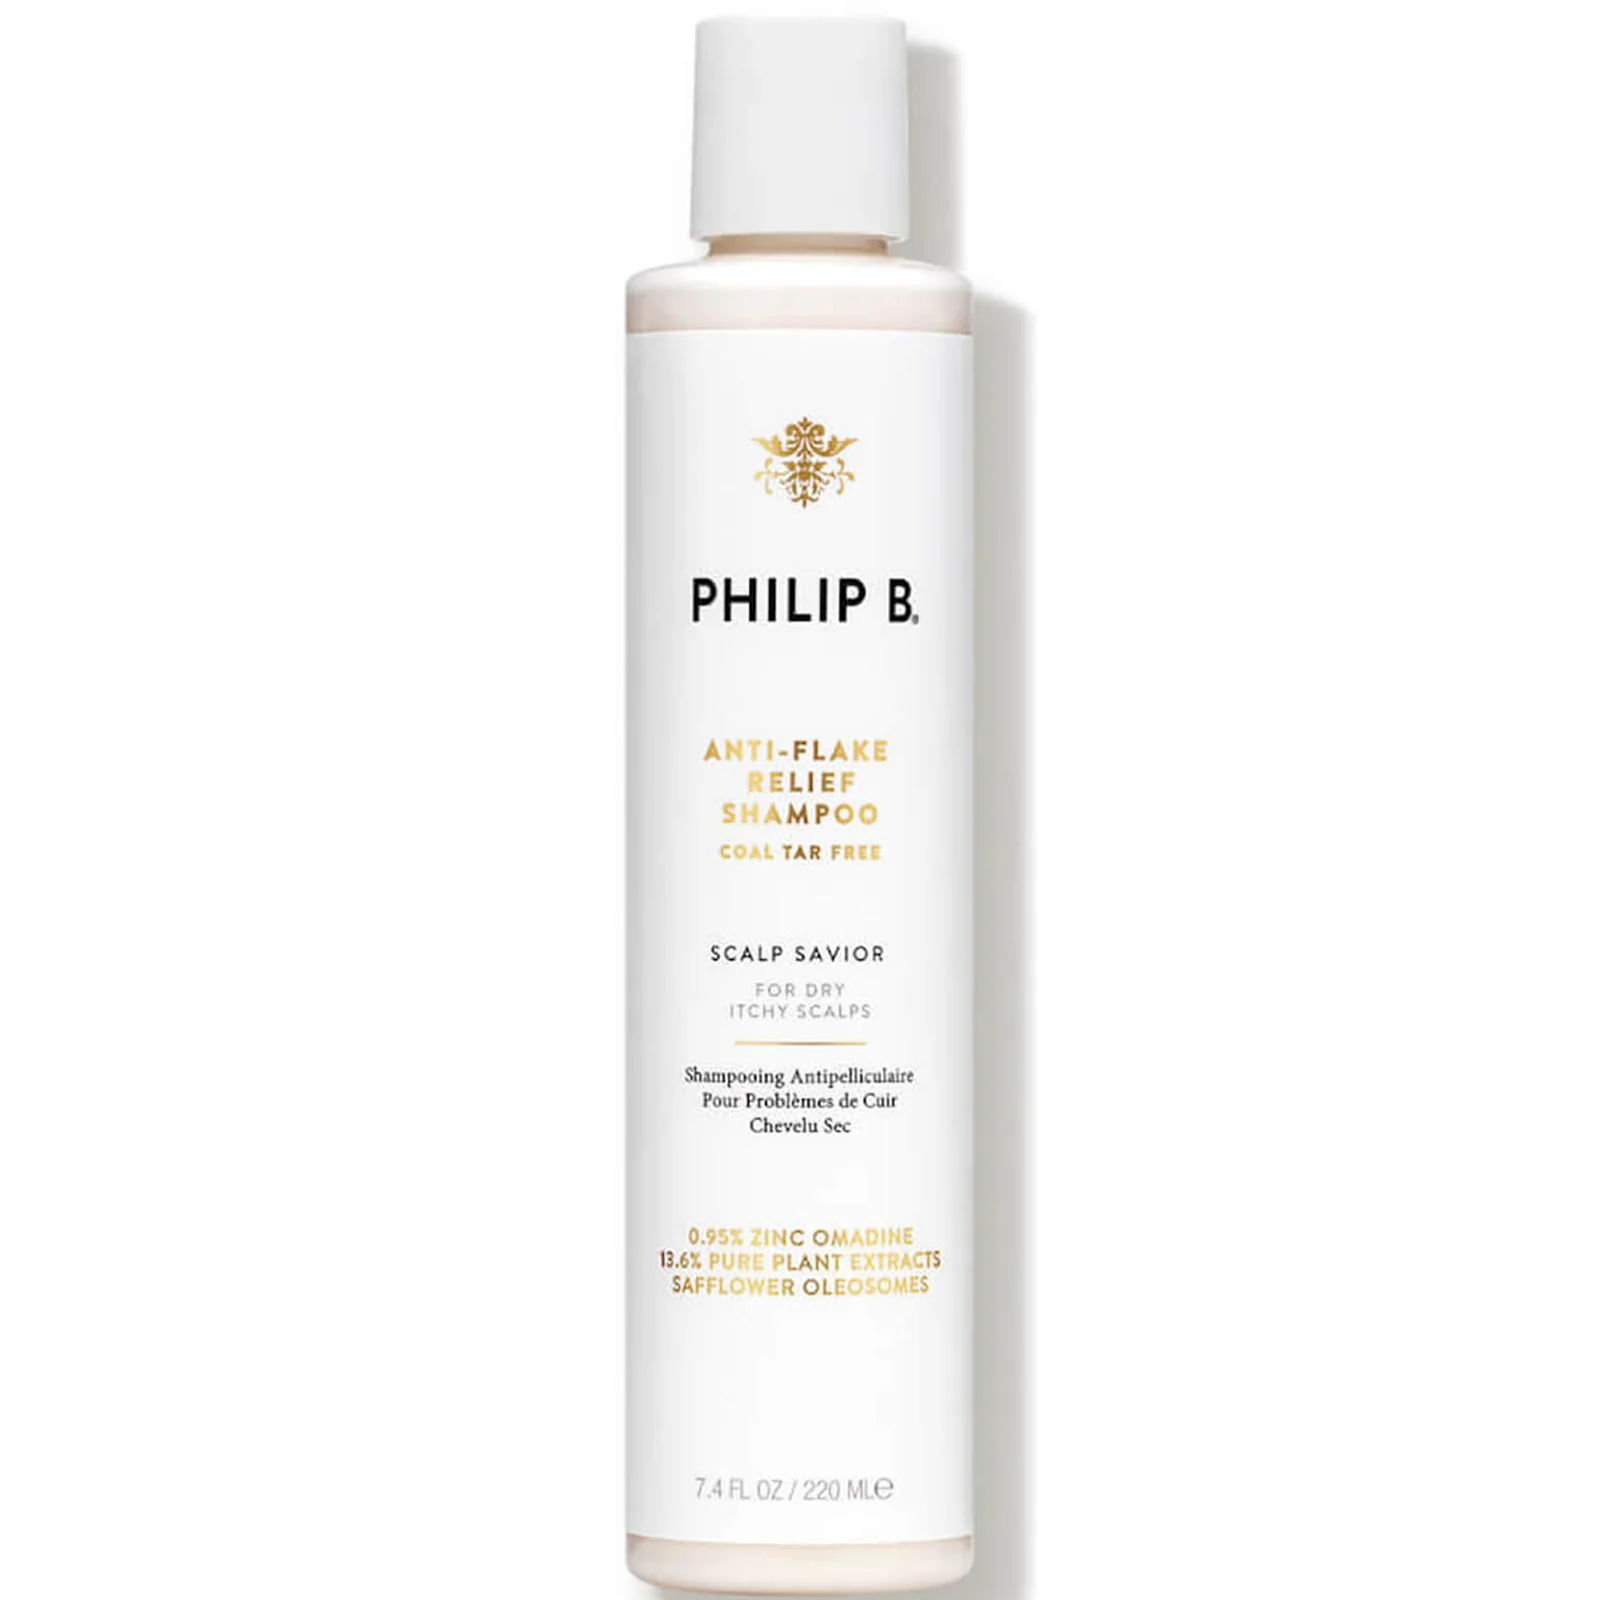 Philip B Anti-Flake Relief Shampoo (220ml) Image 1